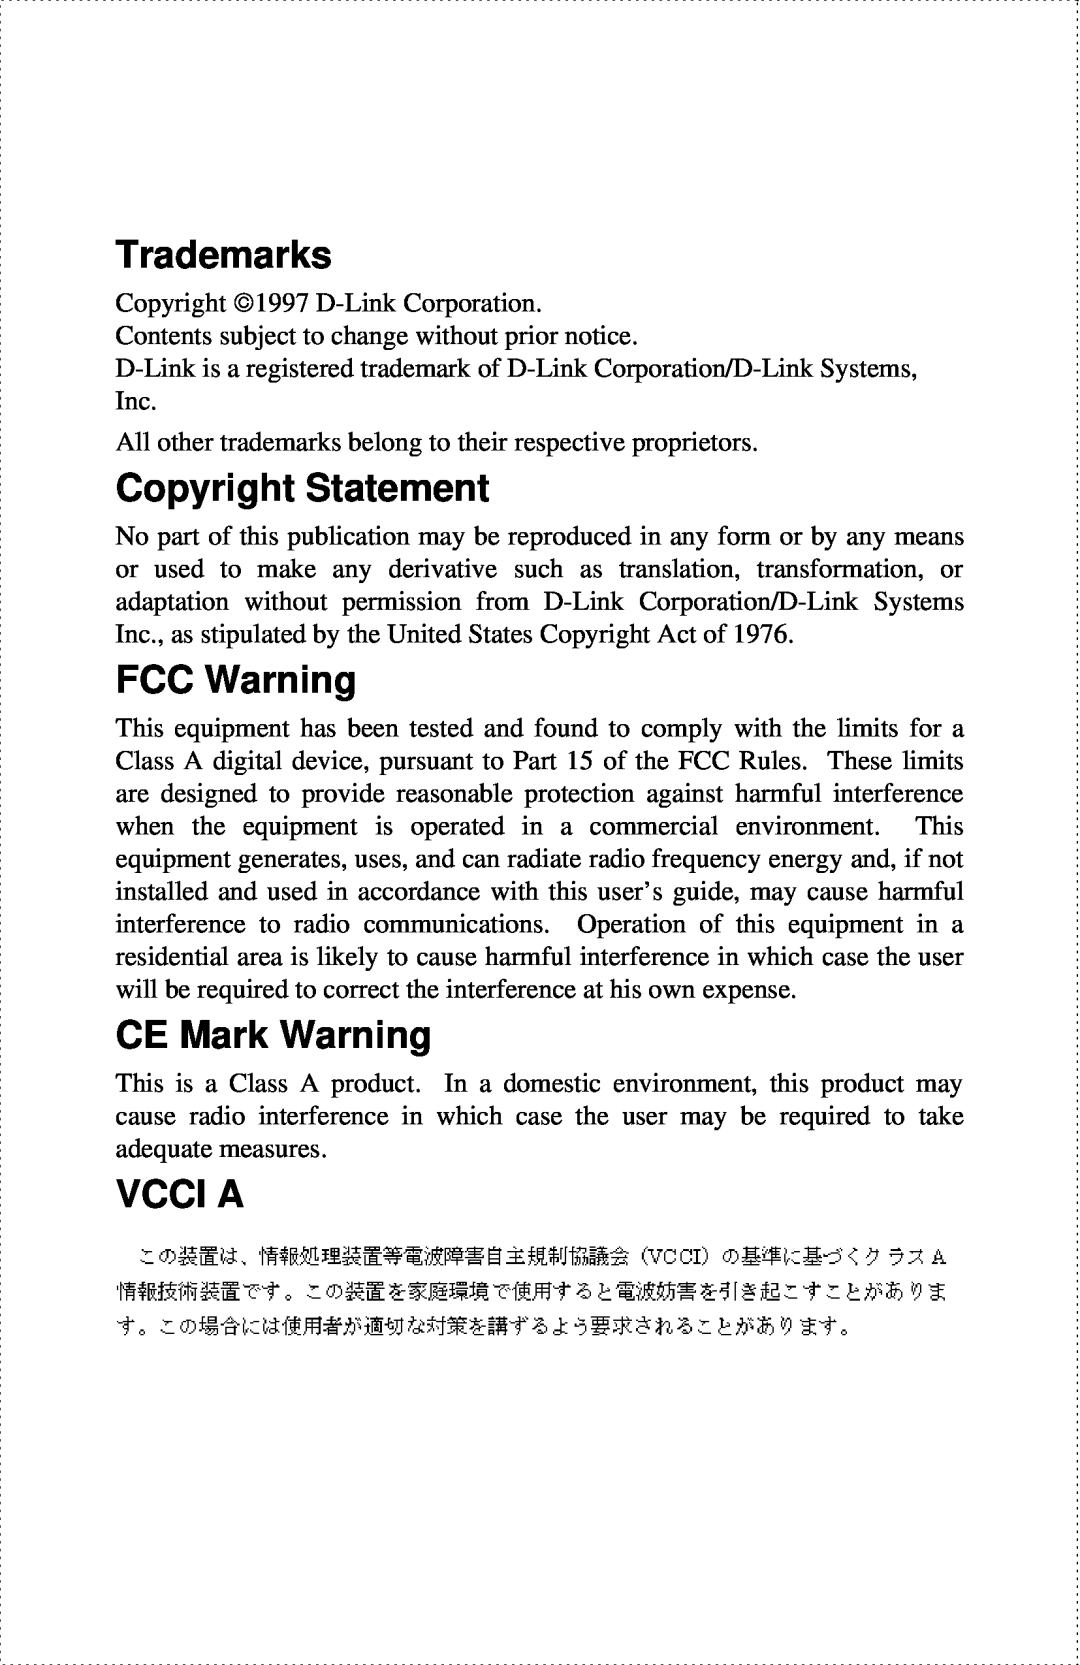 D-Link DES-802 manual Trademarks, Copyright Statement, FCC Warning, CE Mark Warning, Vcci A 